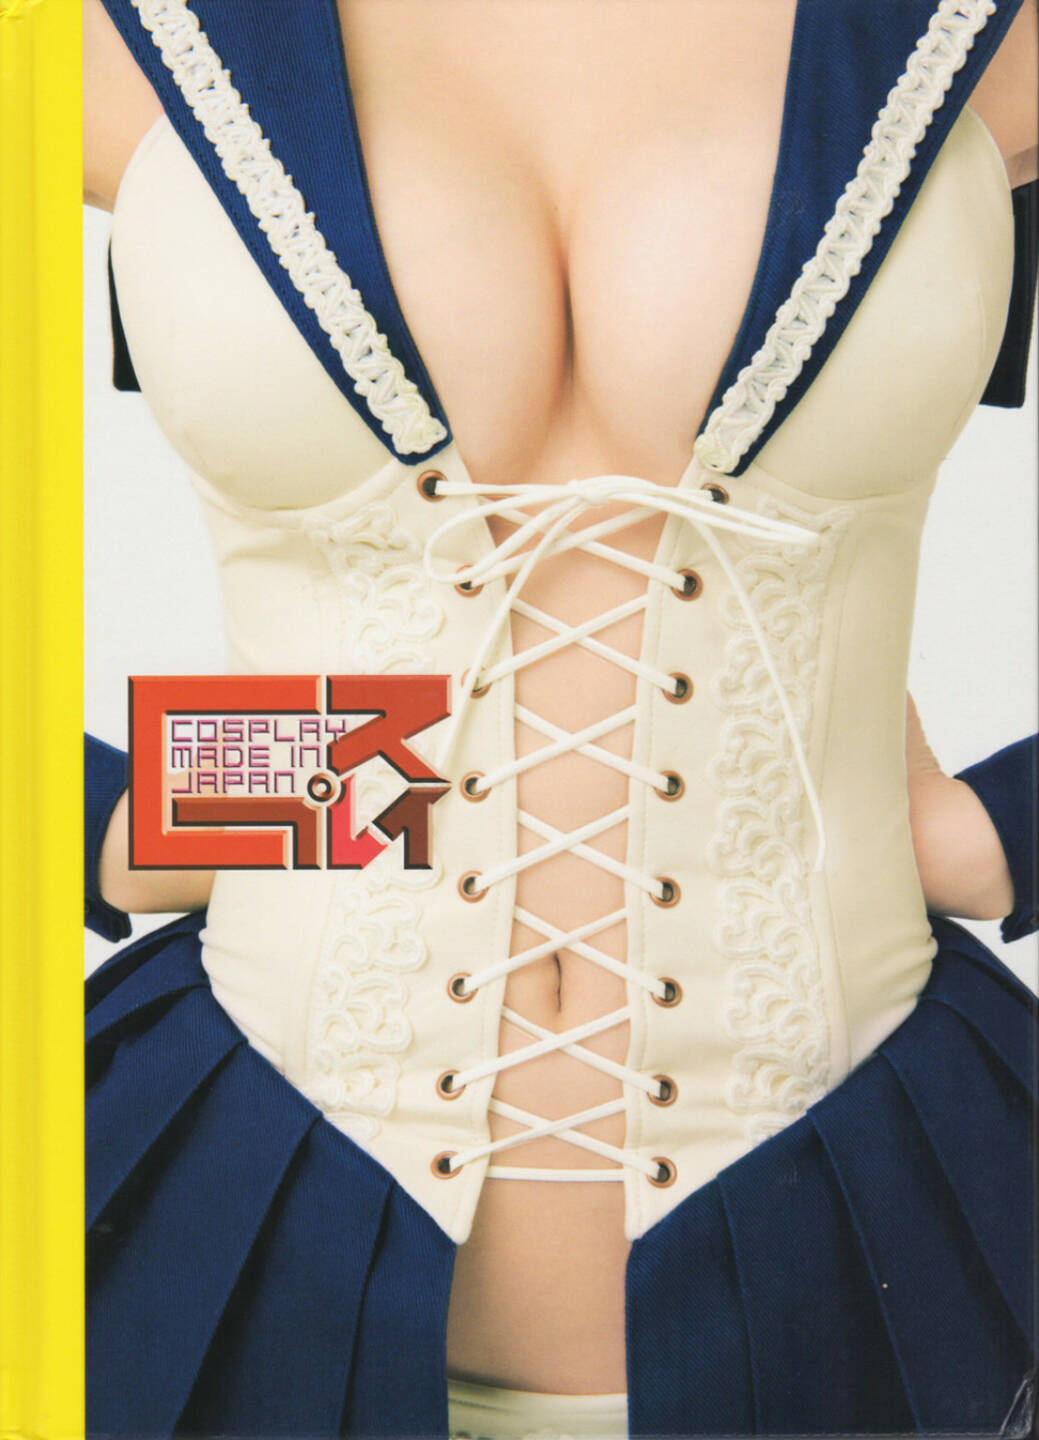 Yuji Susaki - Cosplay made in Japan, Shuppan Kyodo Ryutsu Inc., 2012, Cover - http://josefchladek.com/book/yuji_susaki_-_cosplay_made_in_japan